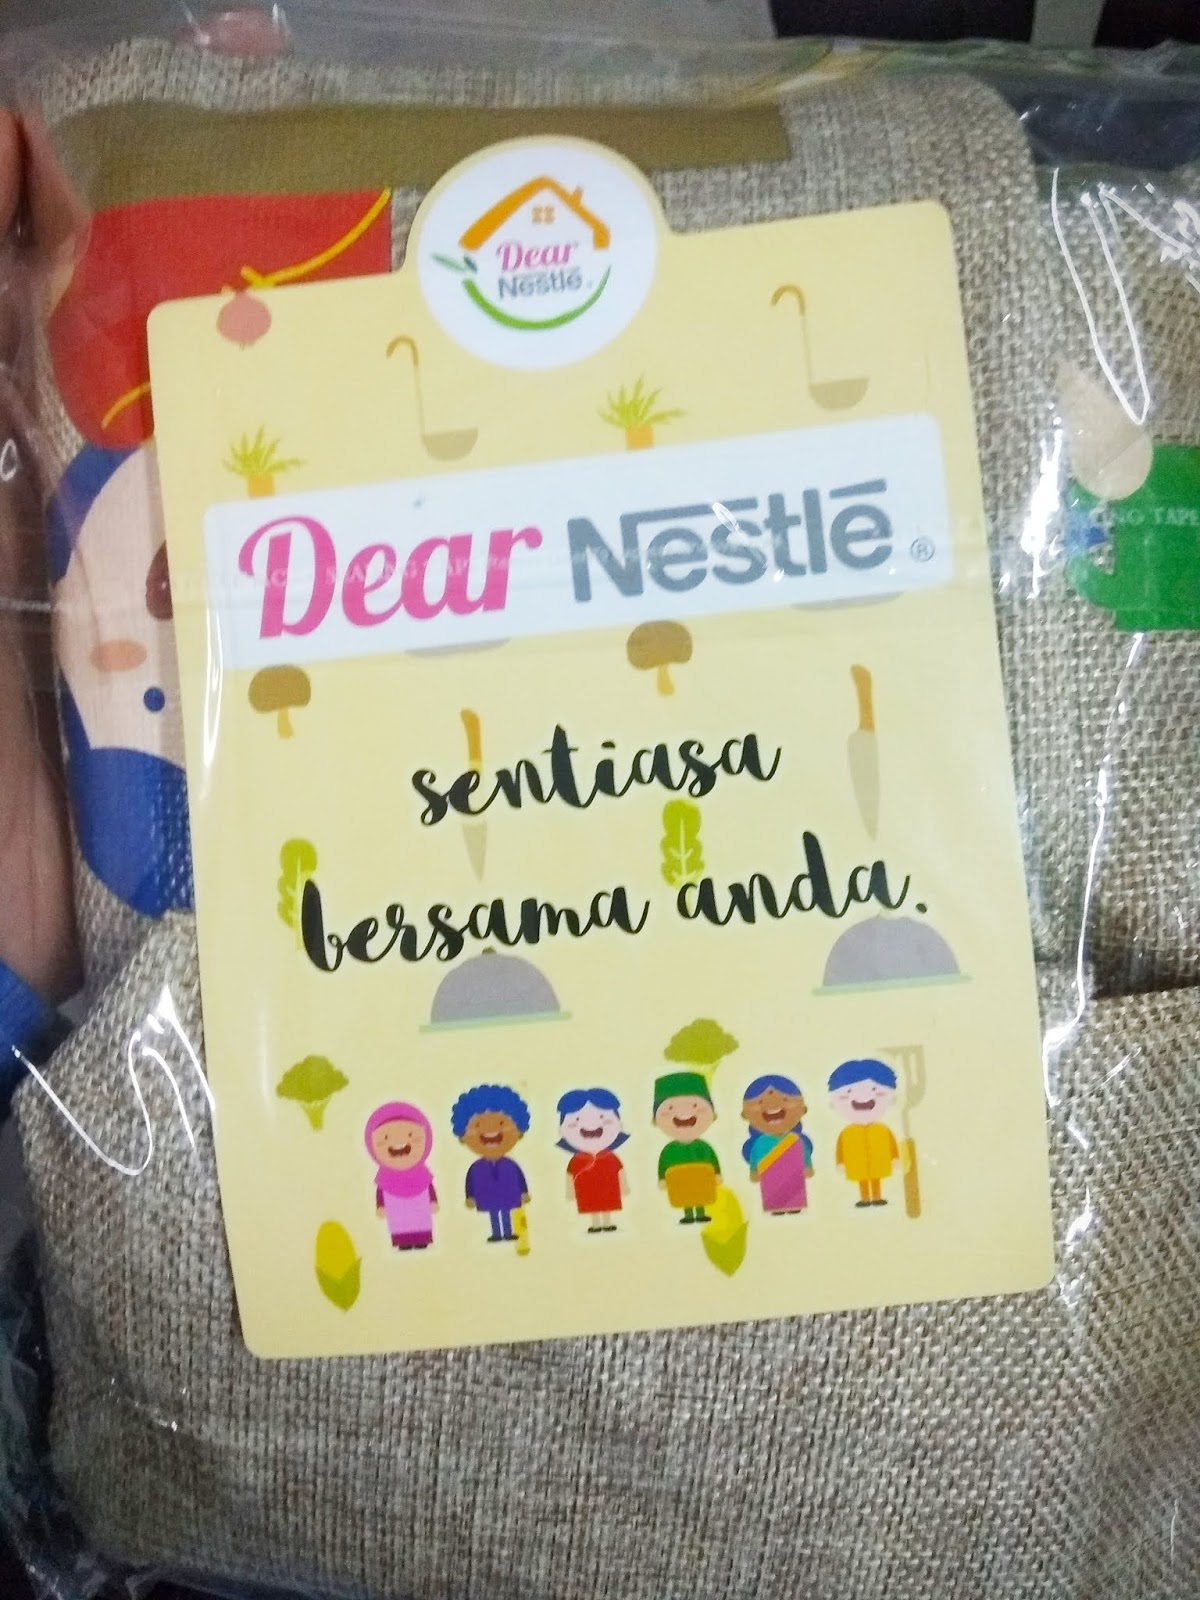 Dear nestle